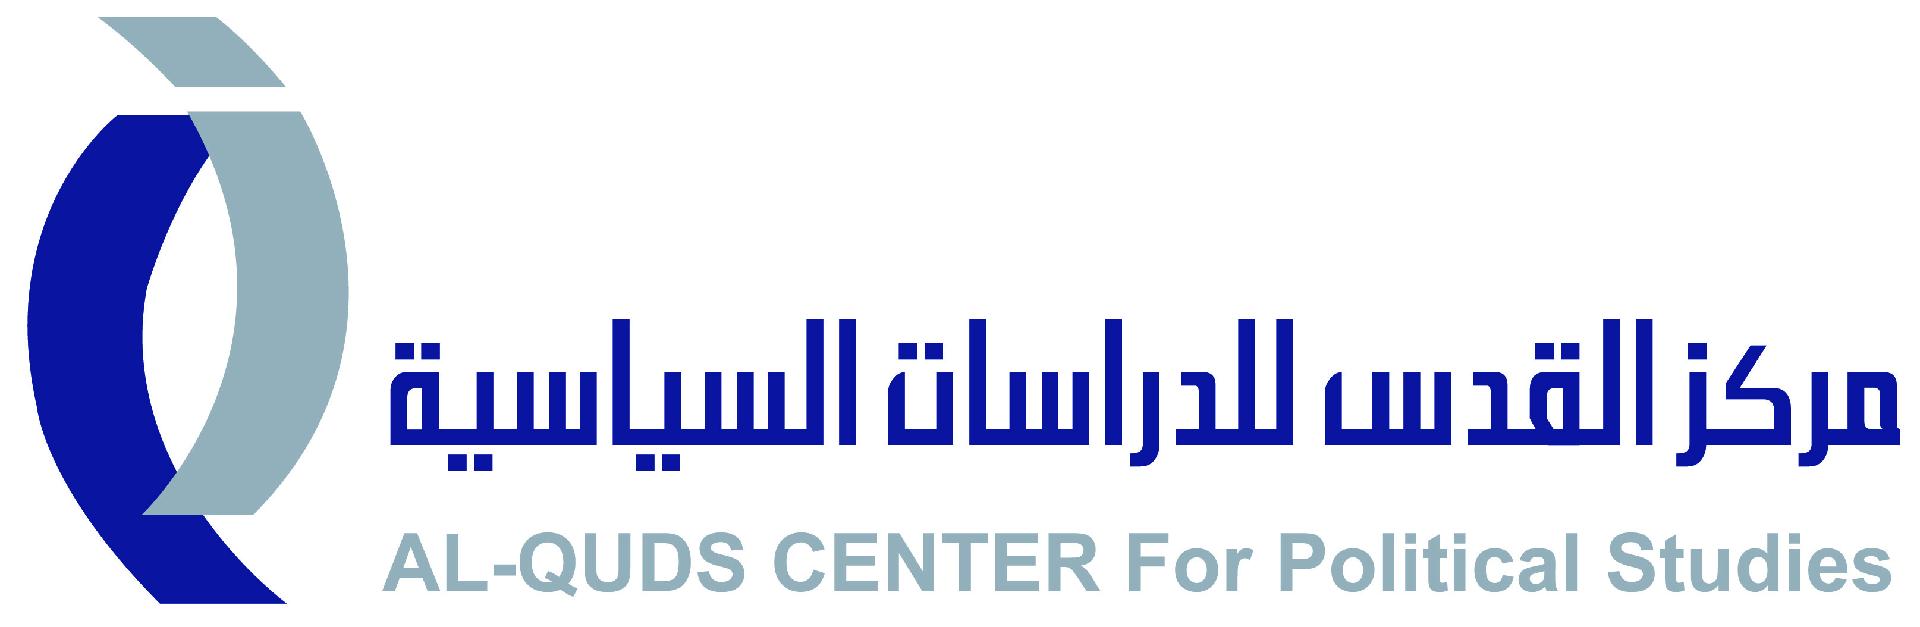 Al-Quds Center for Political Studies